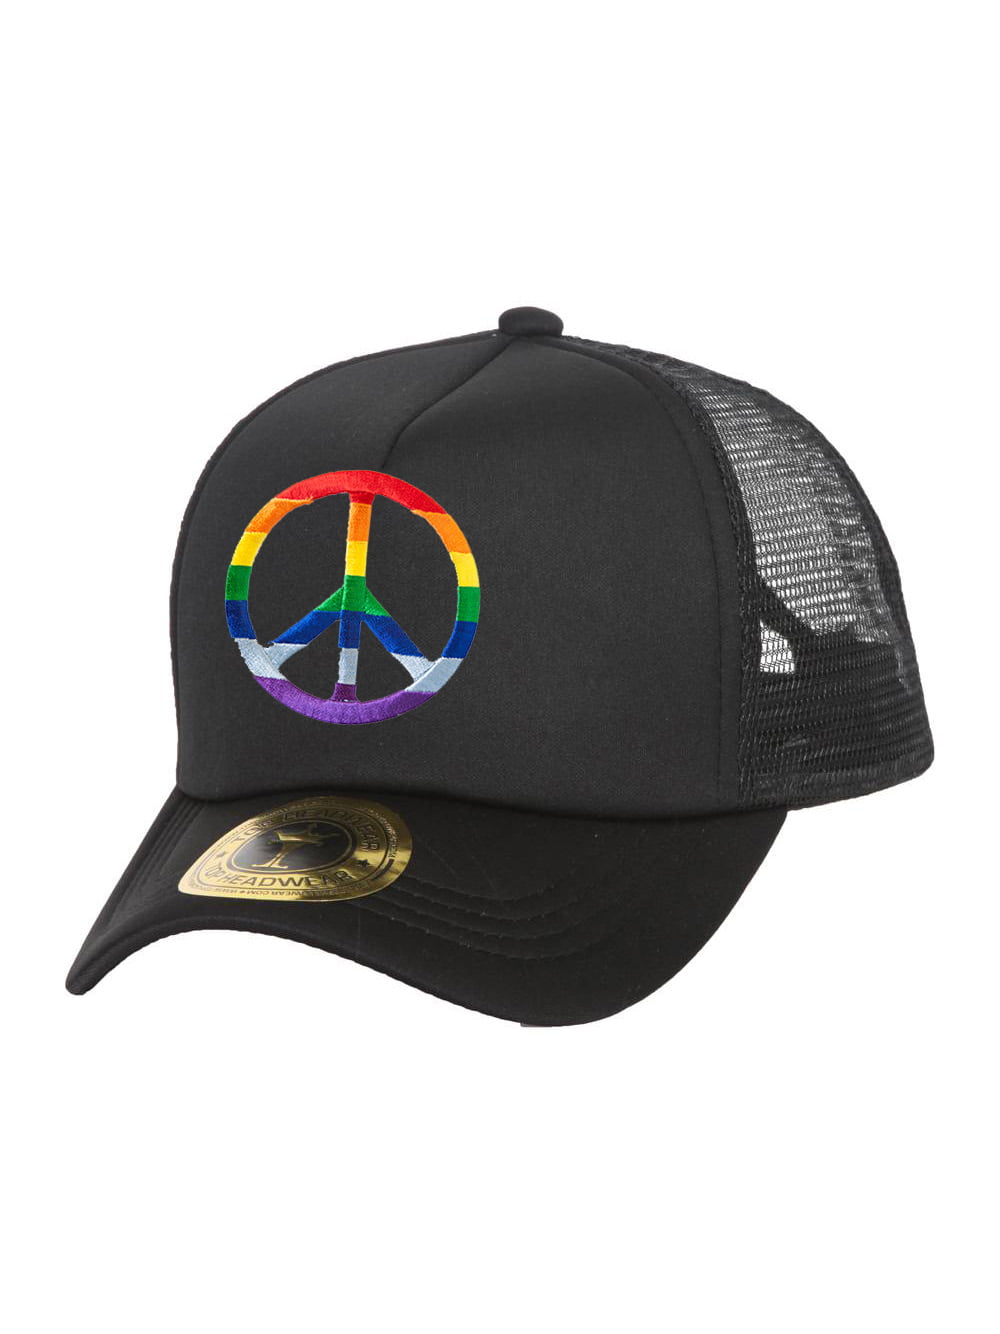 Mesh Baseball Caps Unicorn Rainbow Adjustable Sports Trucker Sun Hats For Outdoor